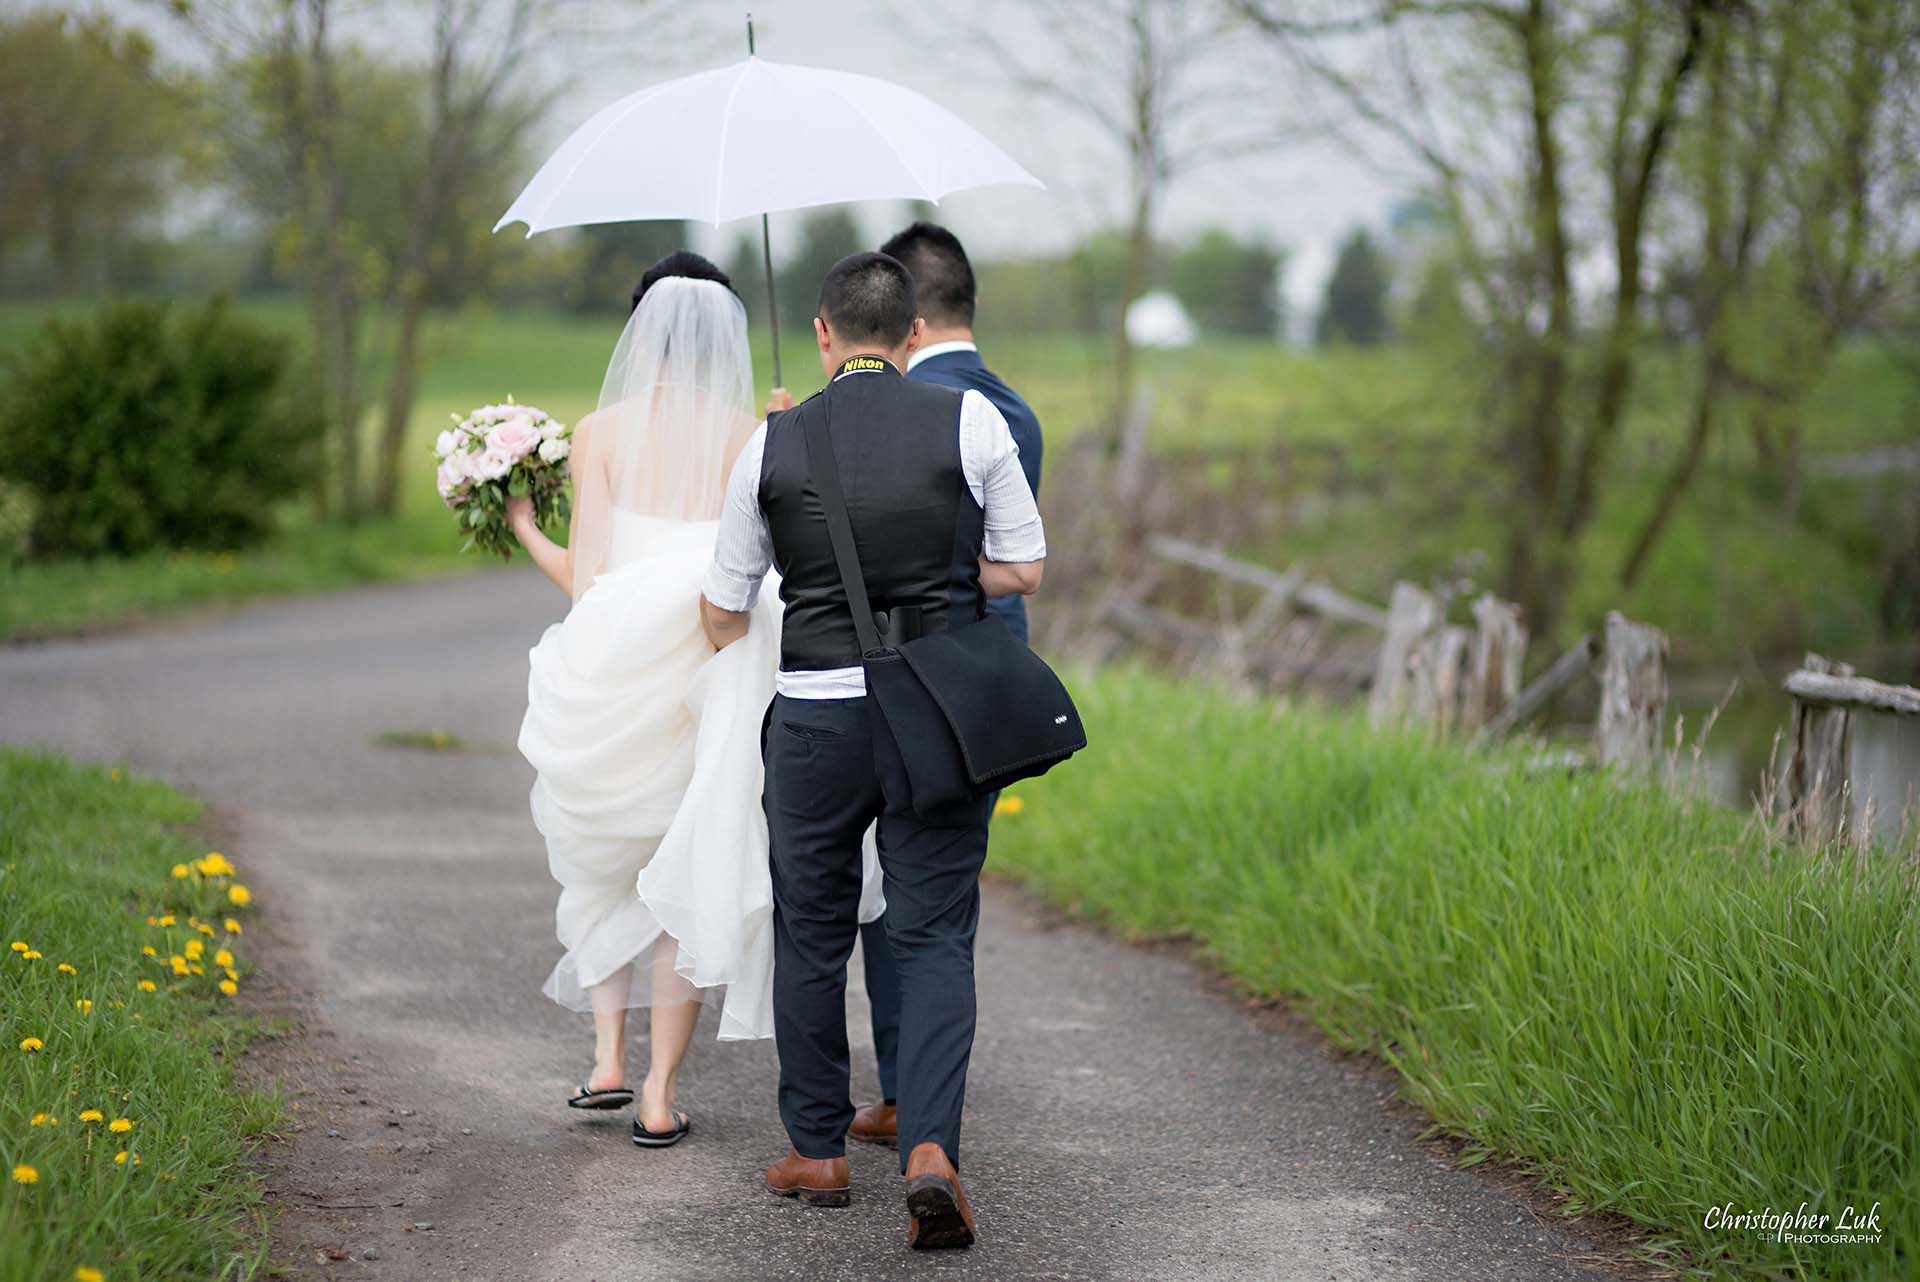 Christopher Luk Toronto Wedding Photographer Behind the Scenes Angus Glen Golf Club Markham Bride Groom Rain Umbrella Walking Together